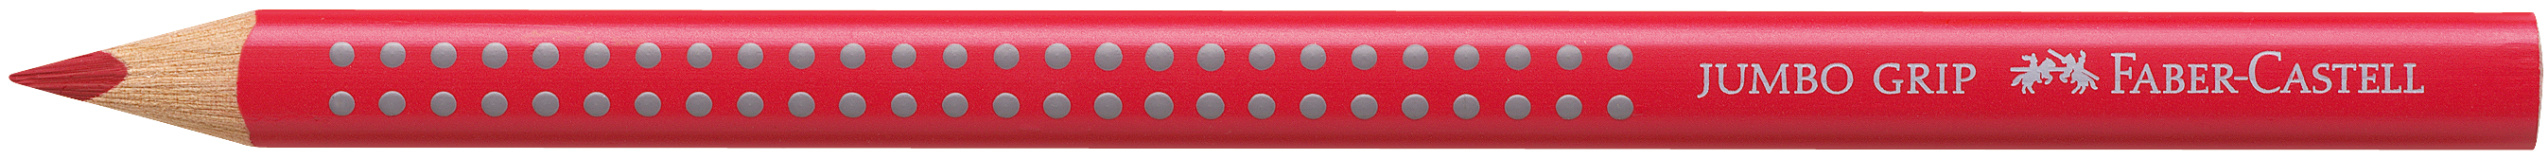 FABER-CASTELL Crayon de couleur Jumbo Grip 110926 karmin karmin